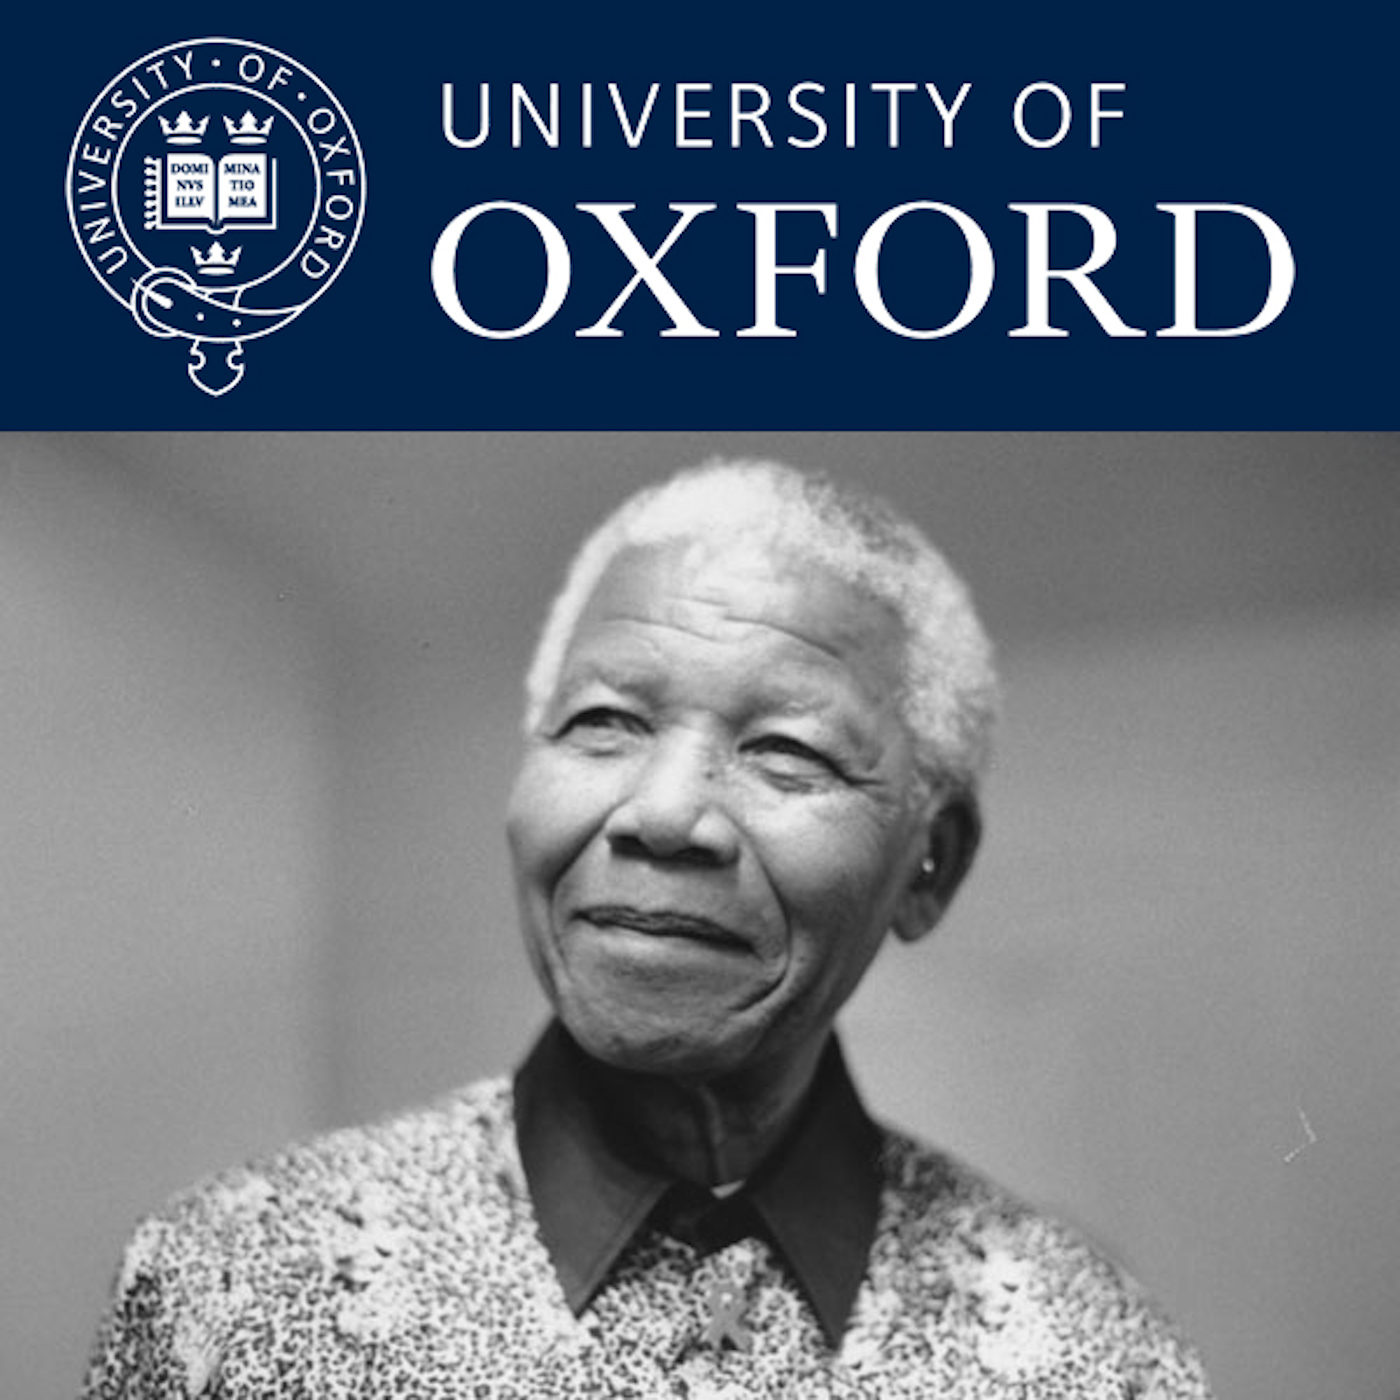 Mandela at Oxford